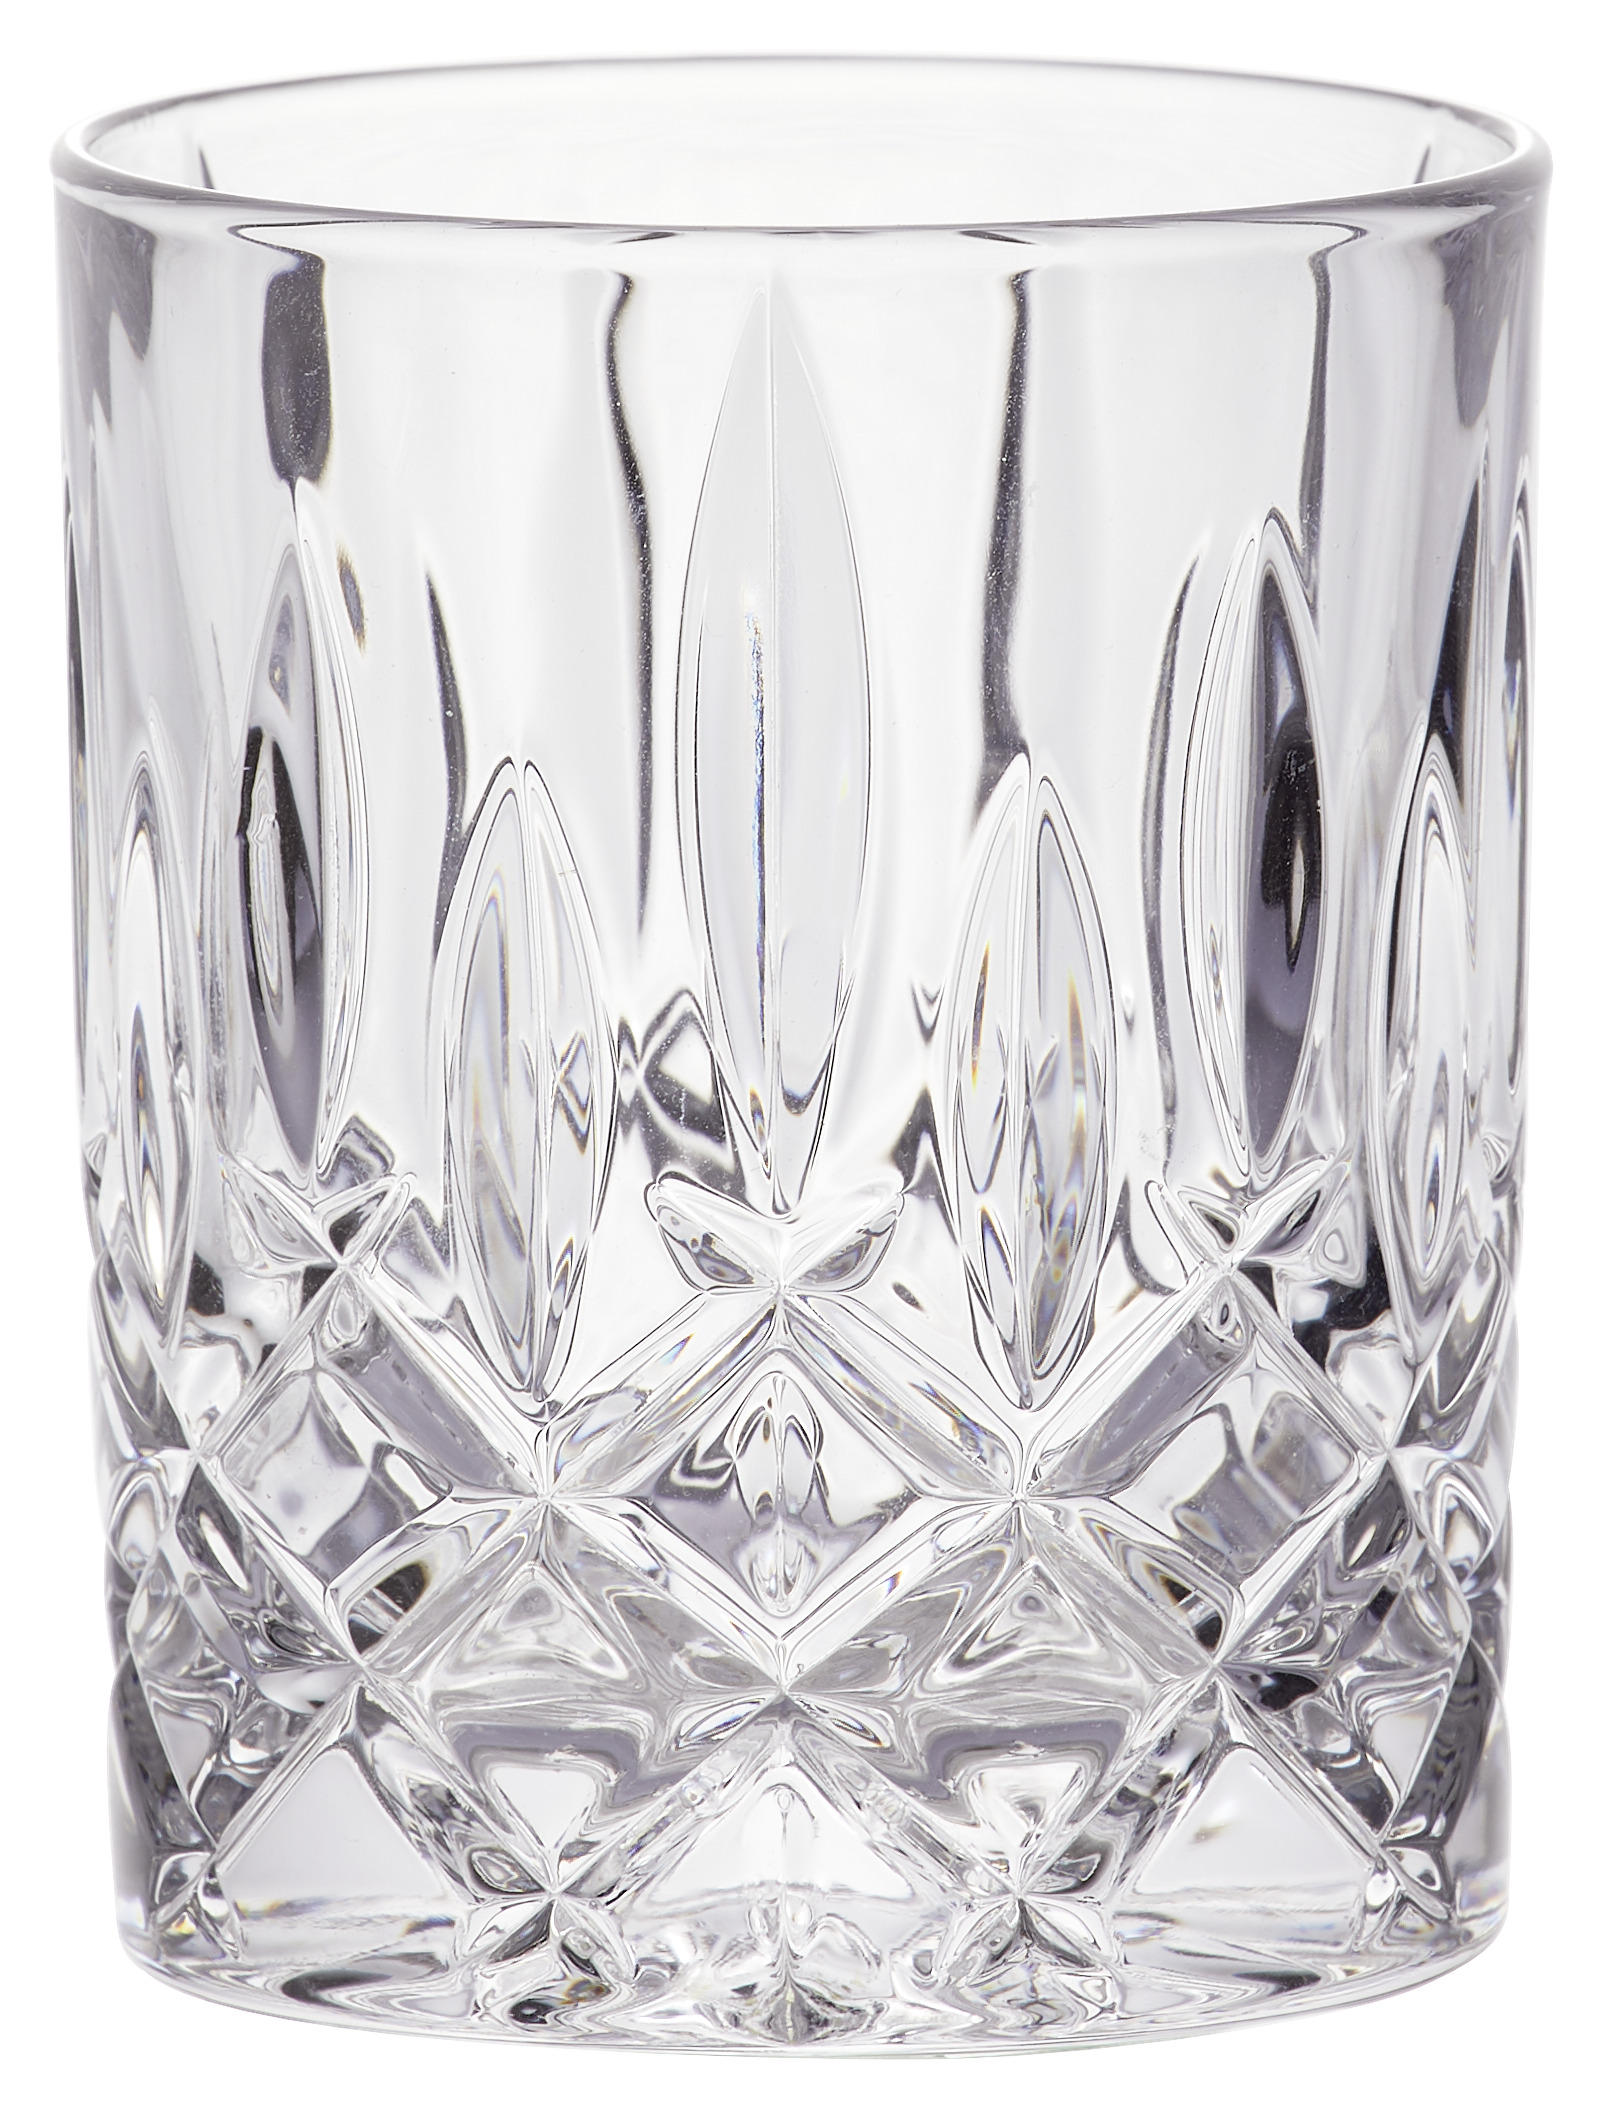 WHISKY-GLÄSERSET Noblesse  6-teilig  - Transparent, LIFESTYLE, Glas (8,2/9,8cm) - Nachtmann